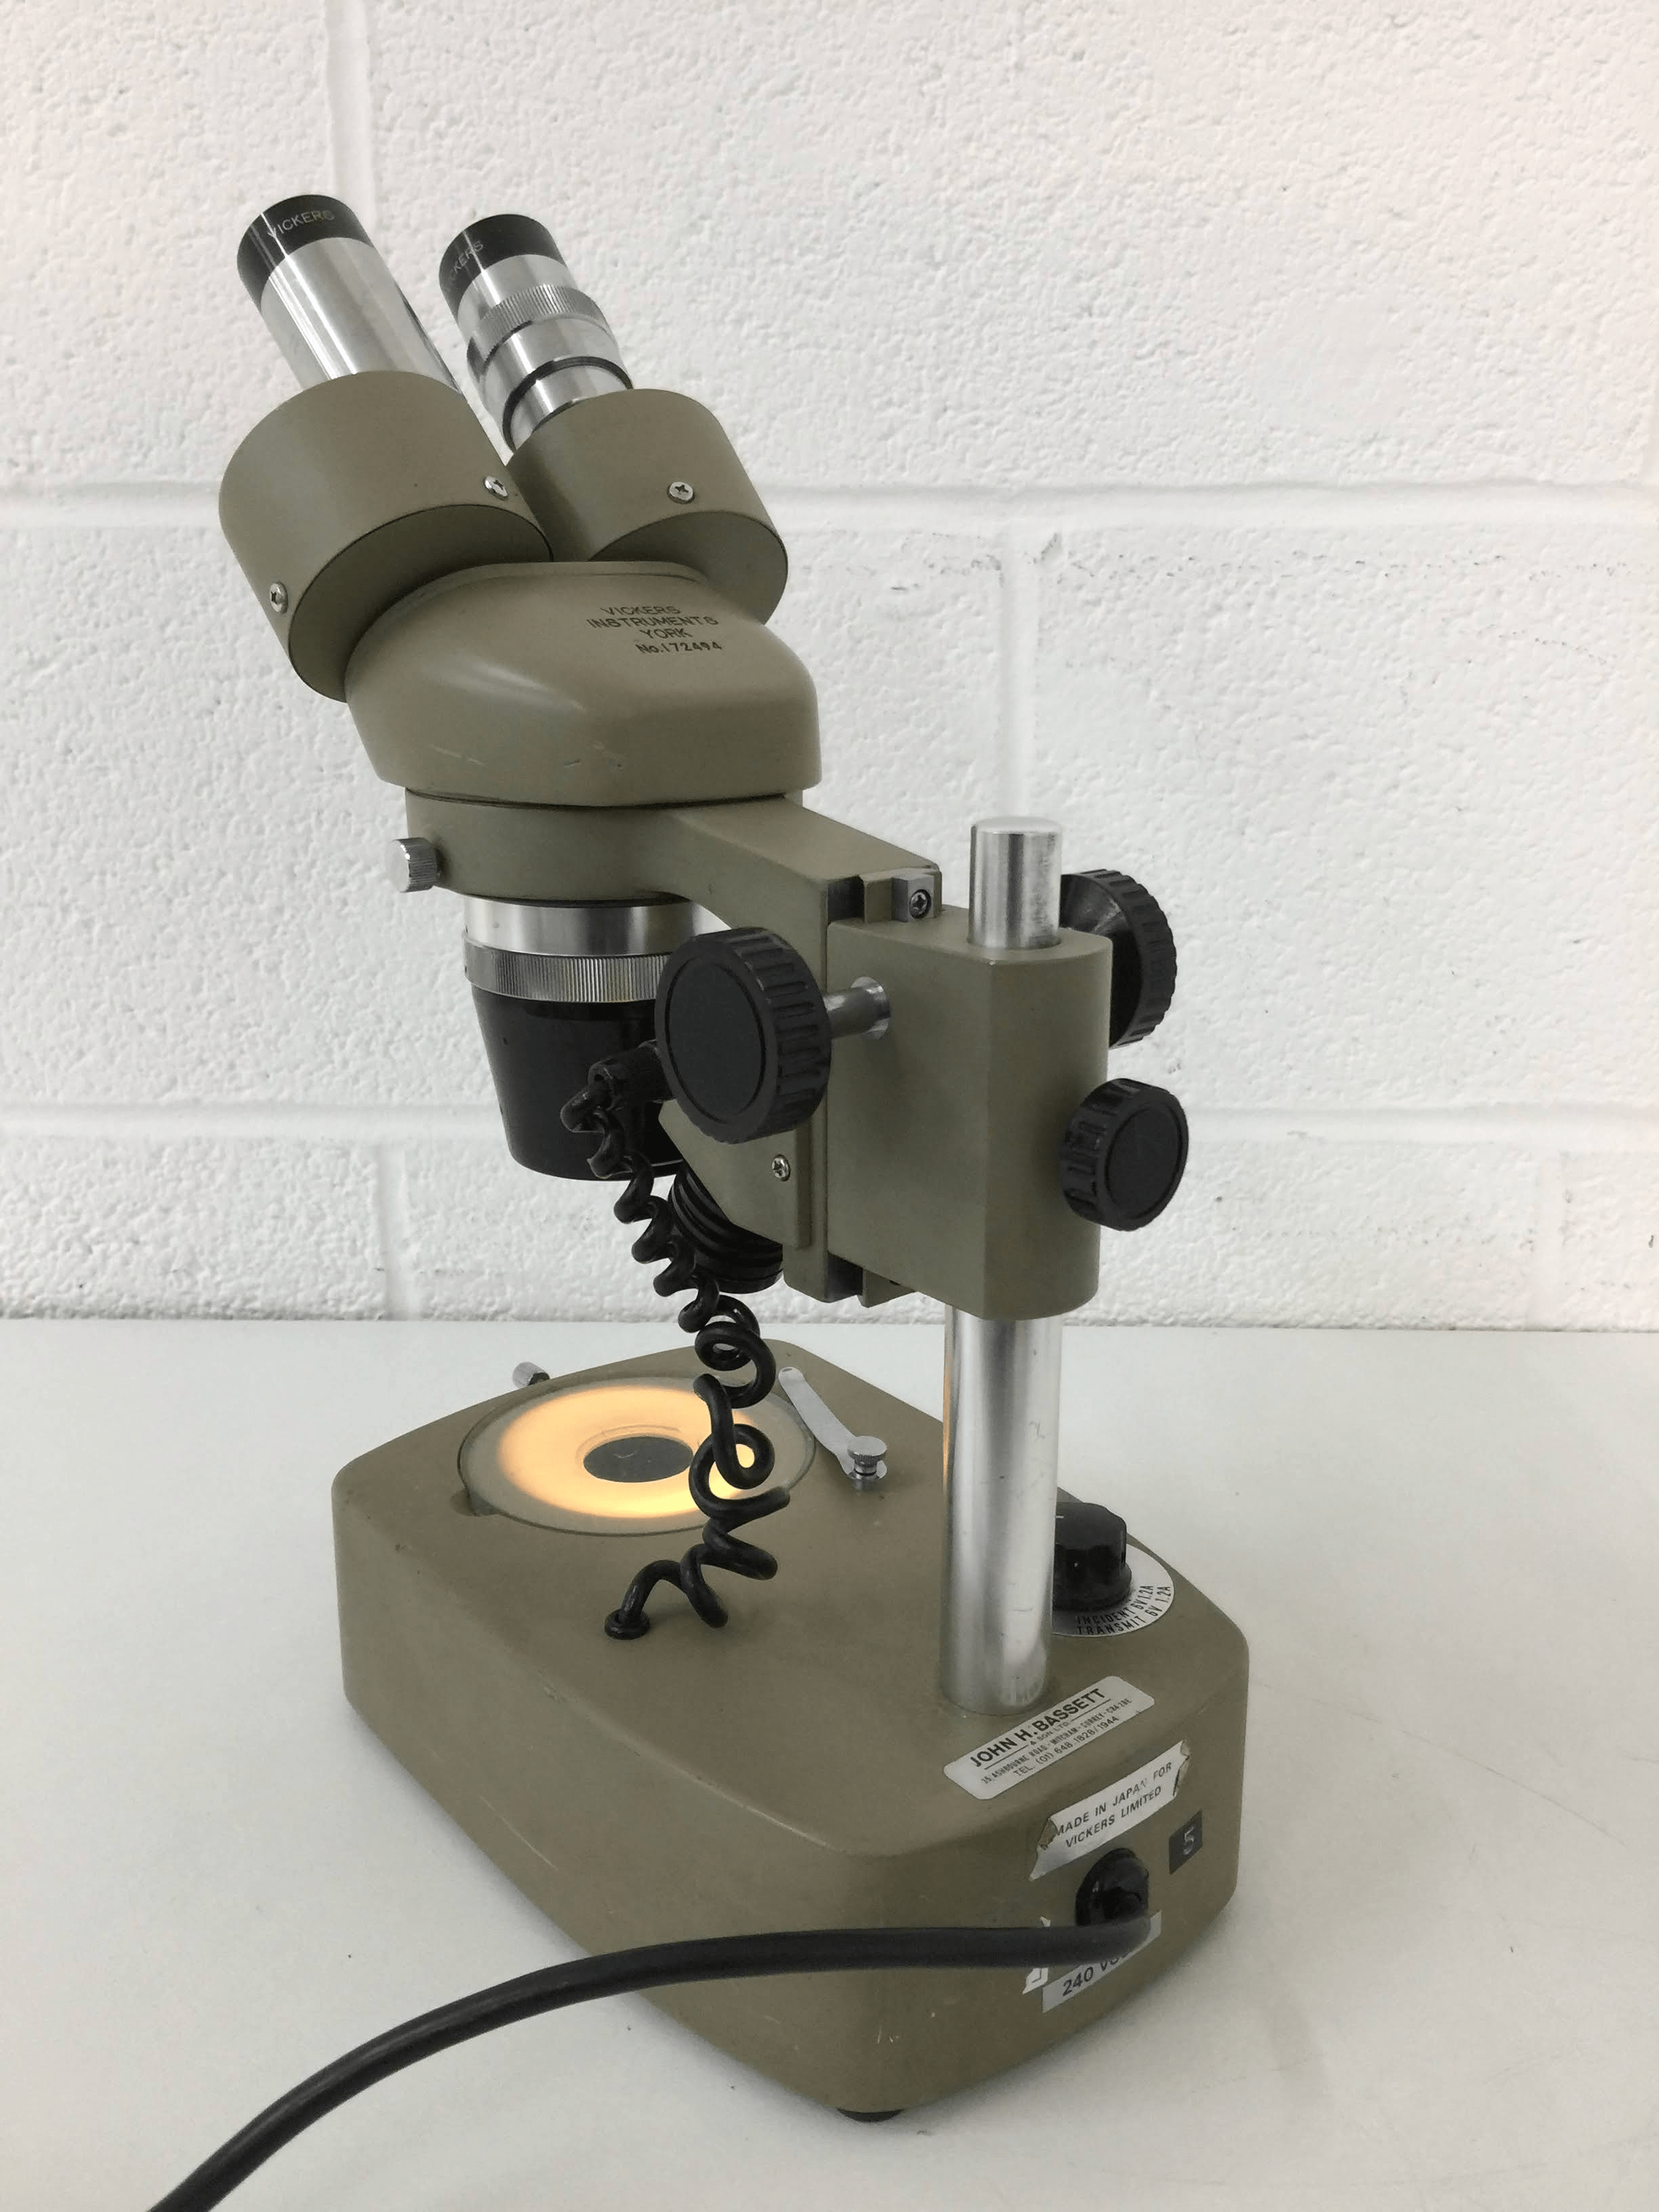 vickers instruments binocular microscope instrument